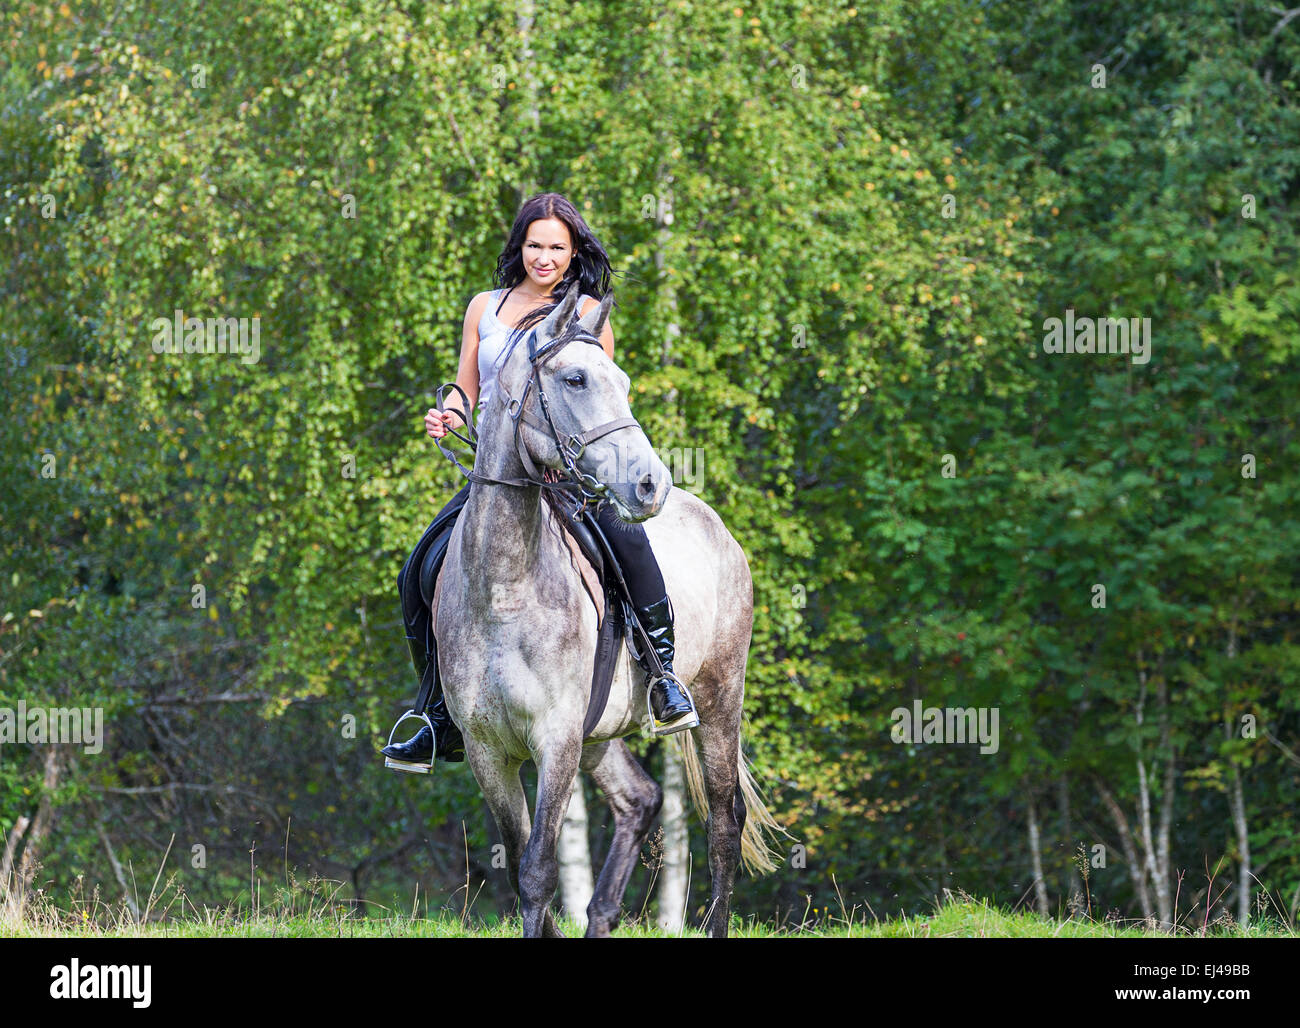 Elegant attractive woman riding a horse farm Stock Photo